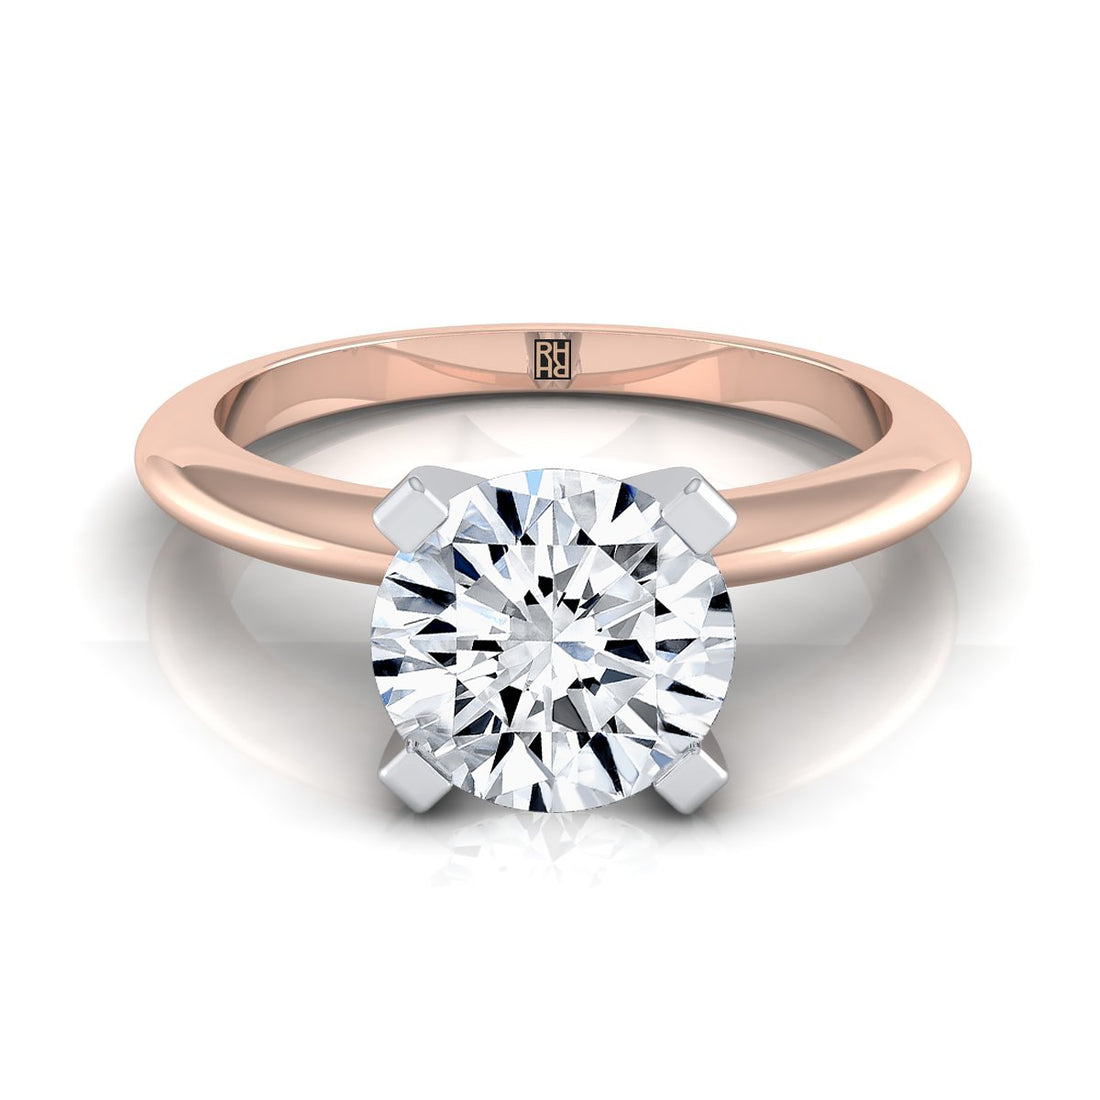 Benefits of Choosing a 4 Prong Diamond Ring